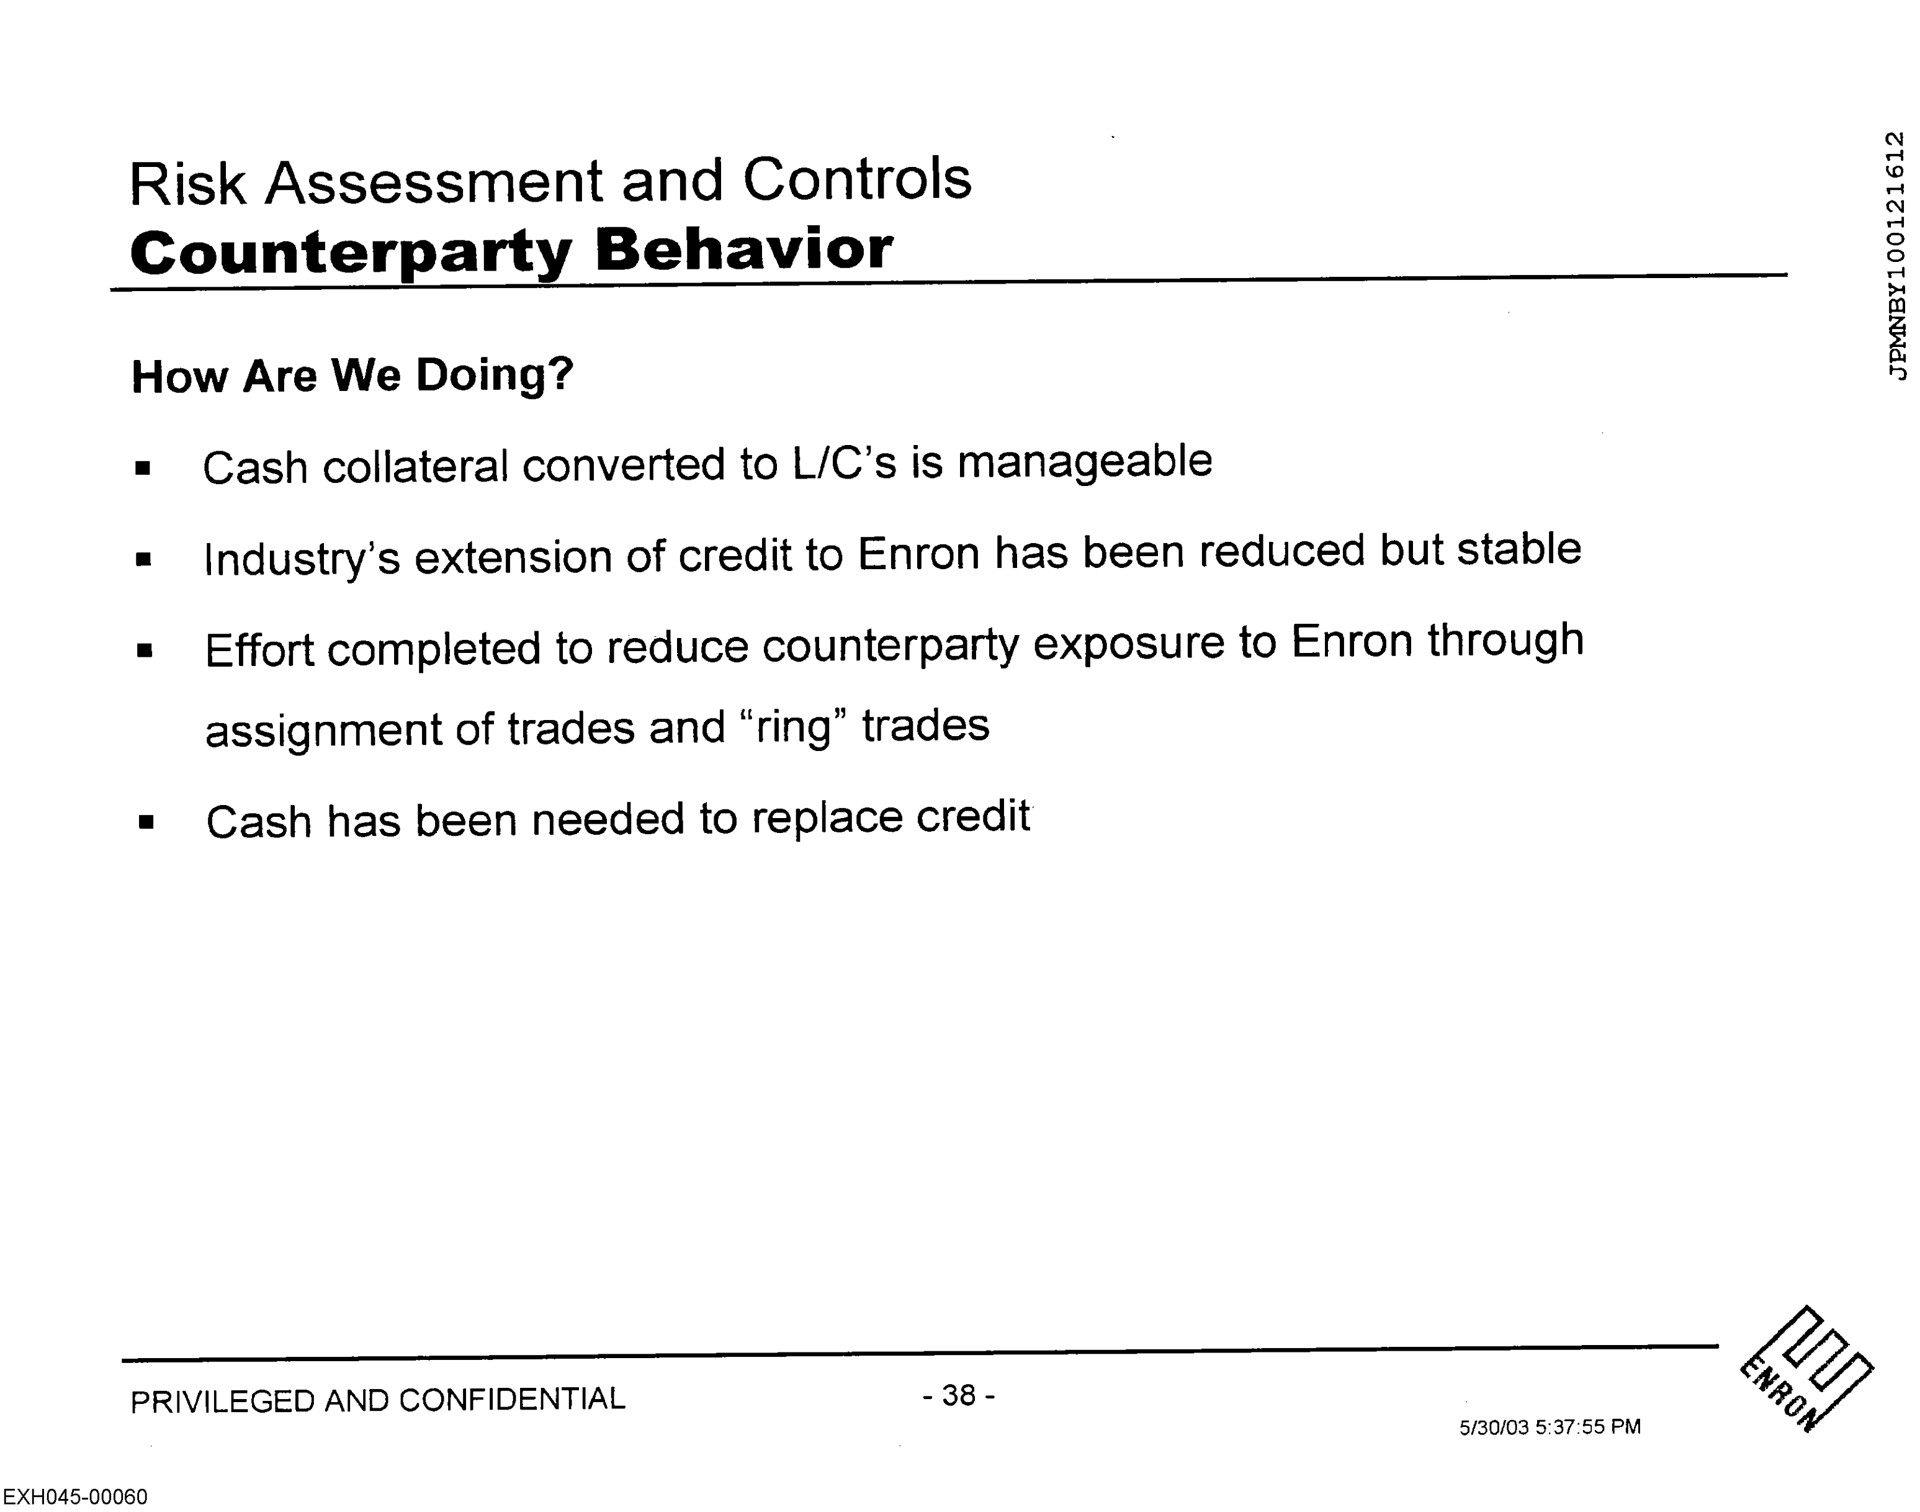 risk assessment and controls behavior | Enron